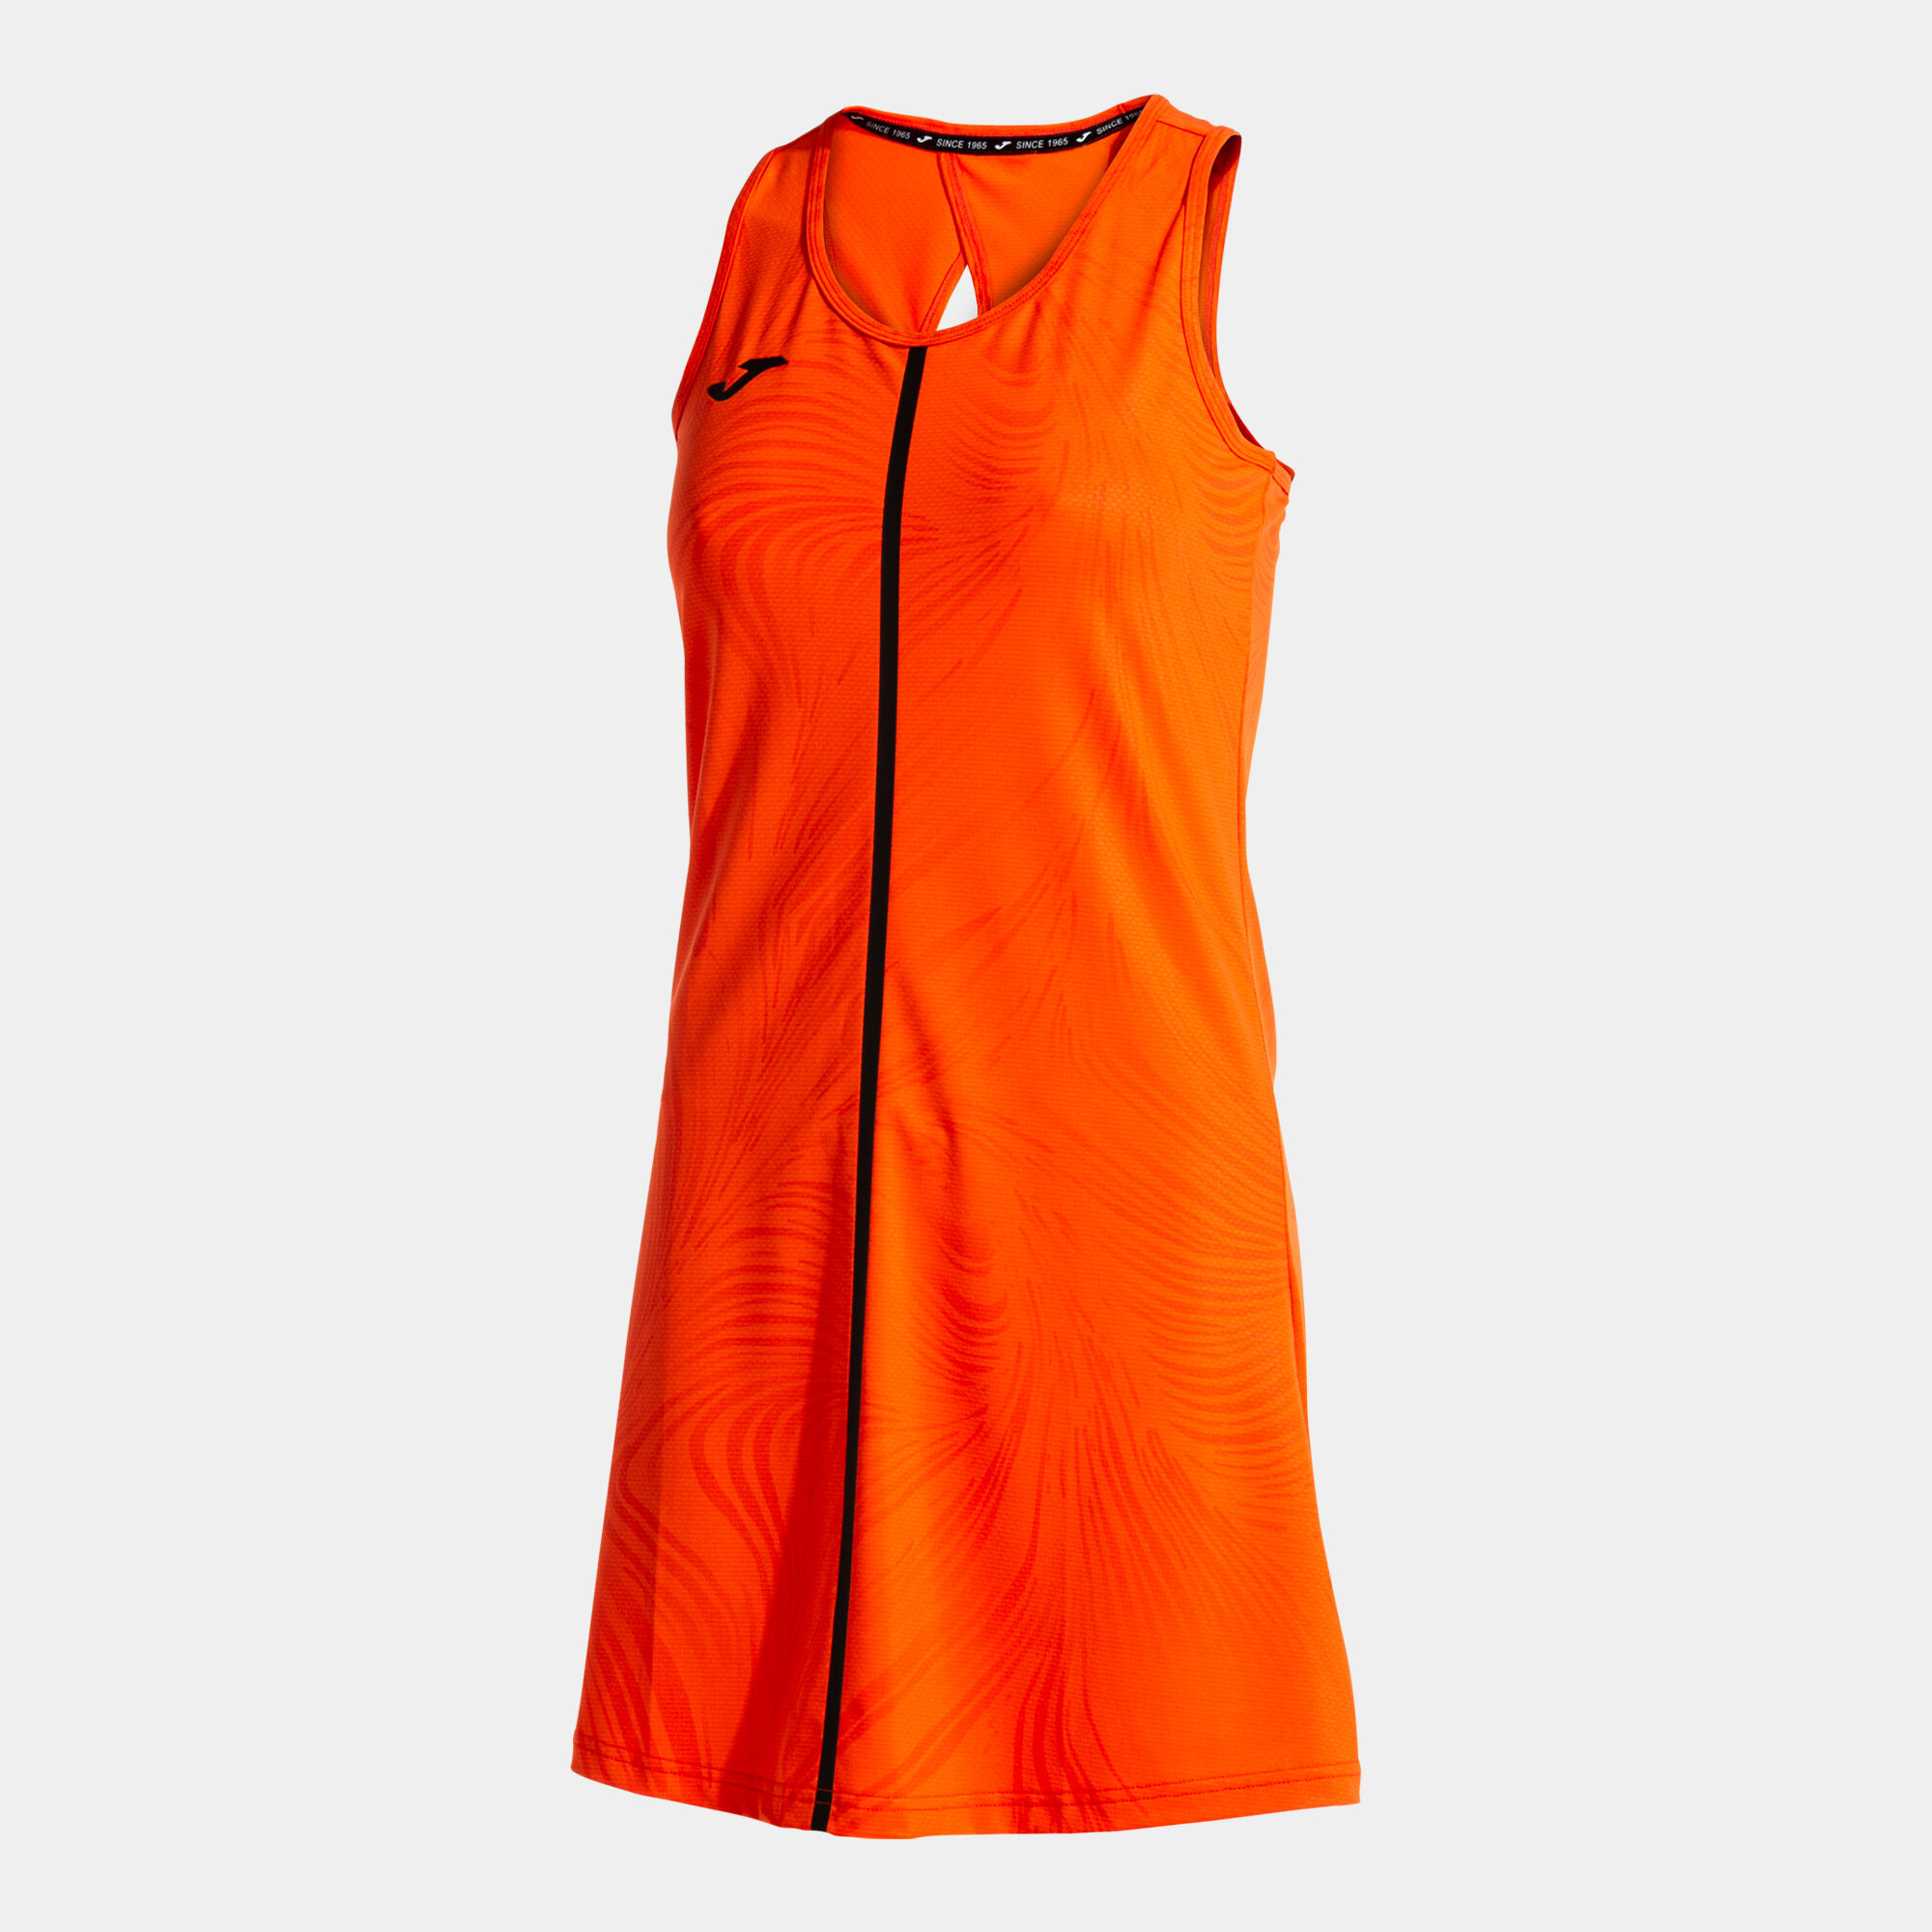 Dress woman Challenge orange